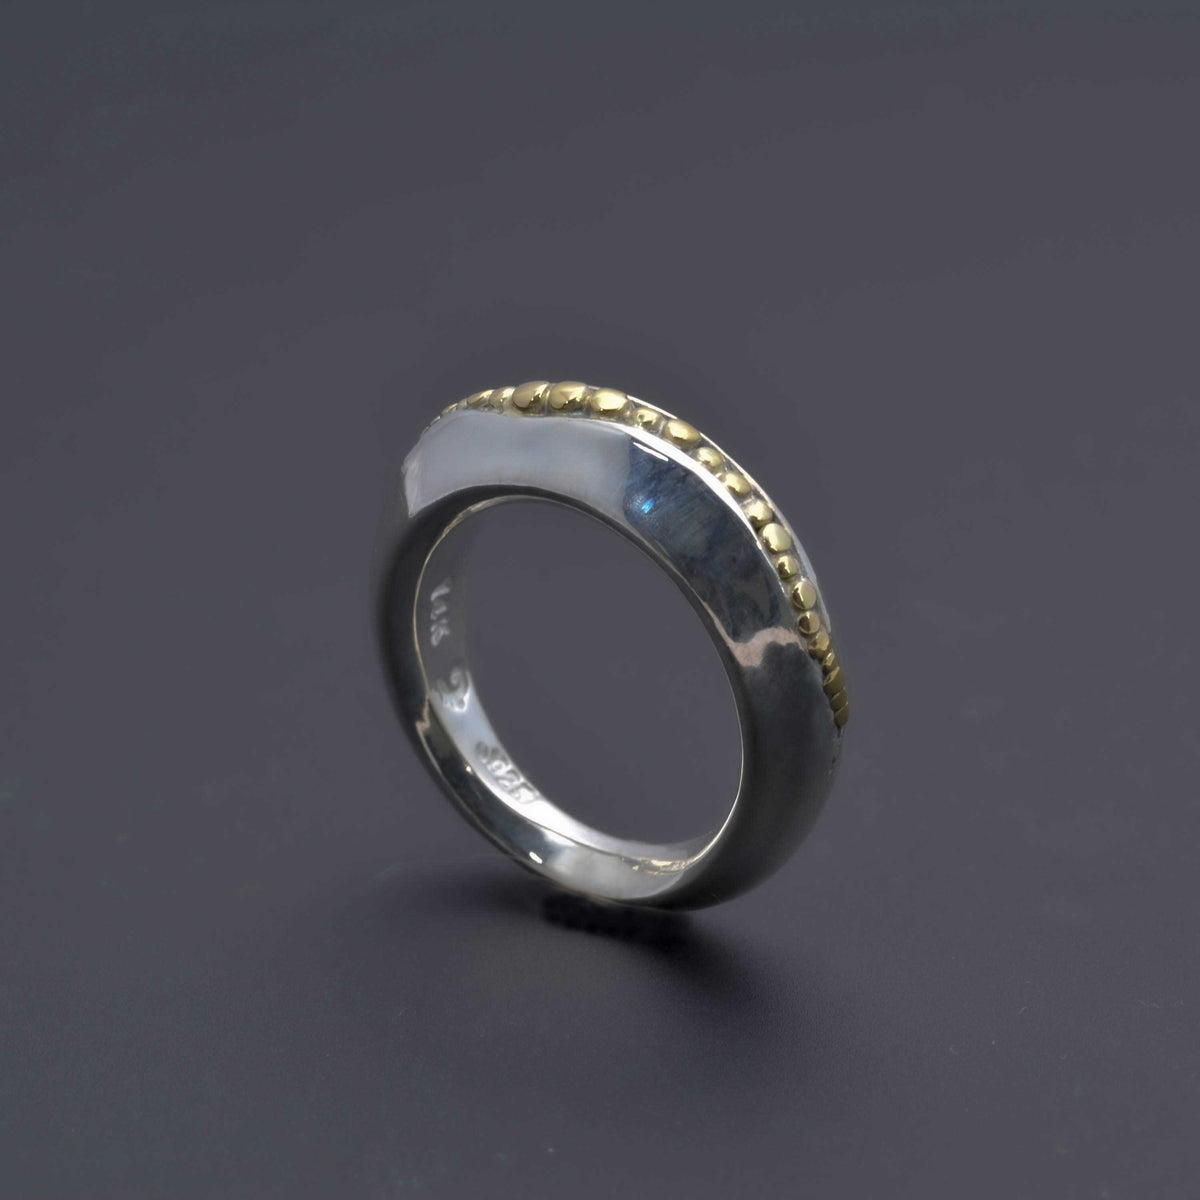 Goldener Pfadring, ein eleganter, einzigartiger Ring mit 14K Goldakzent